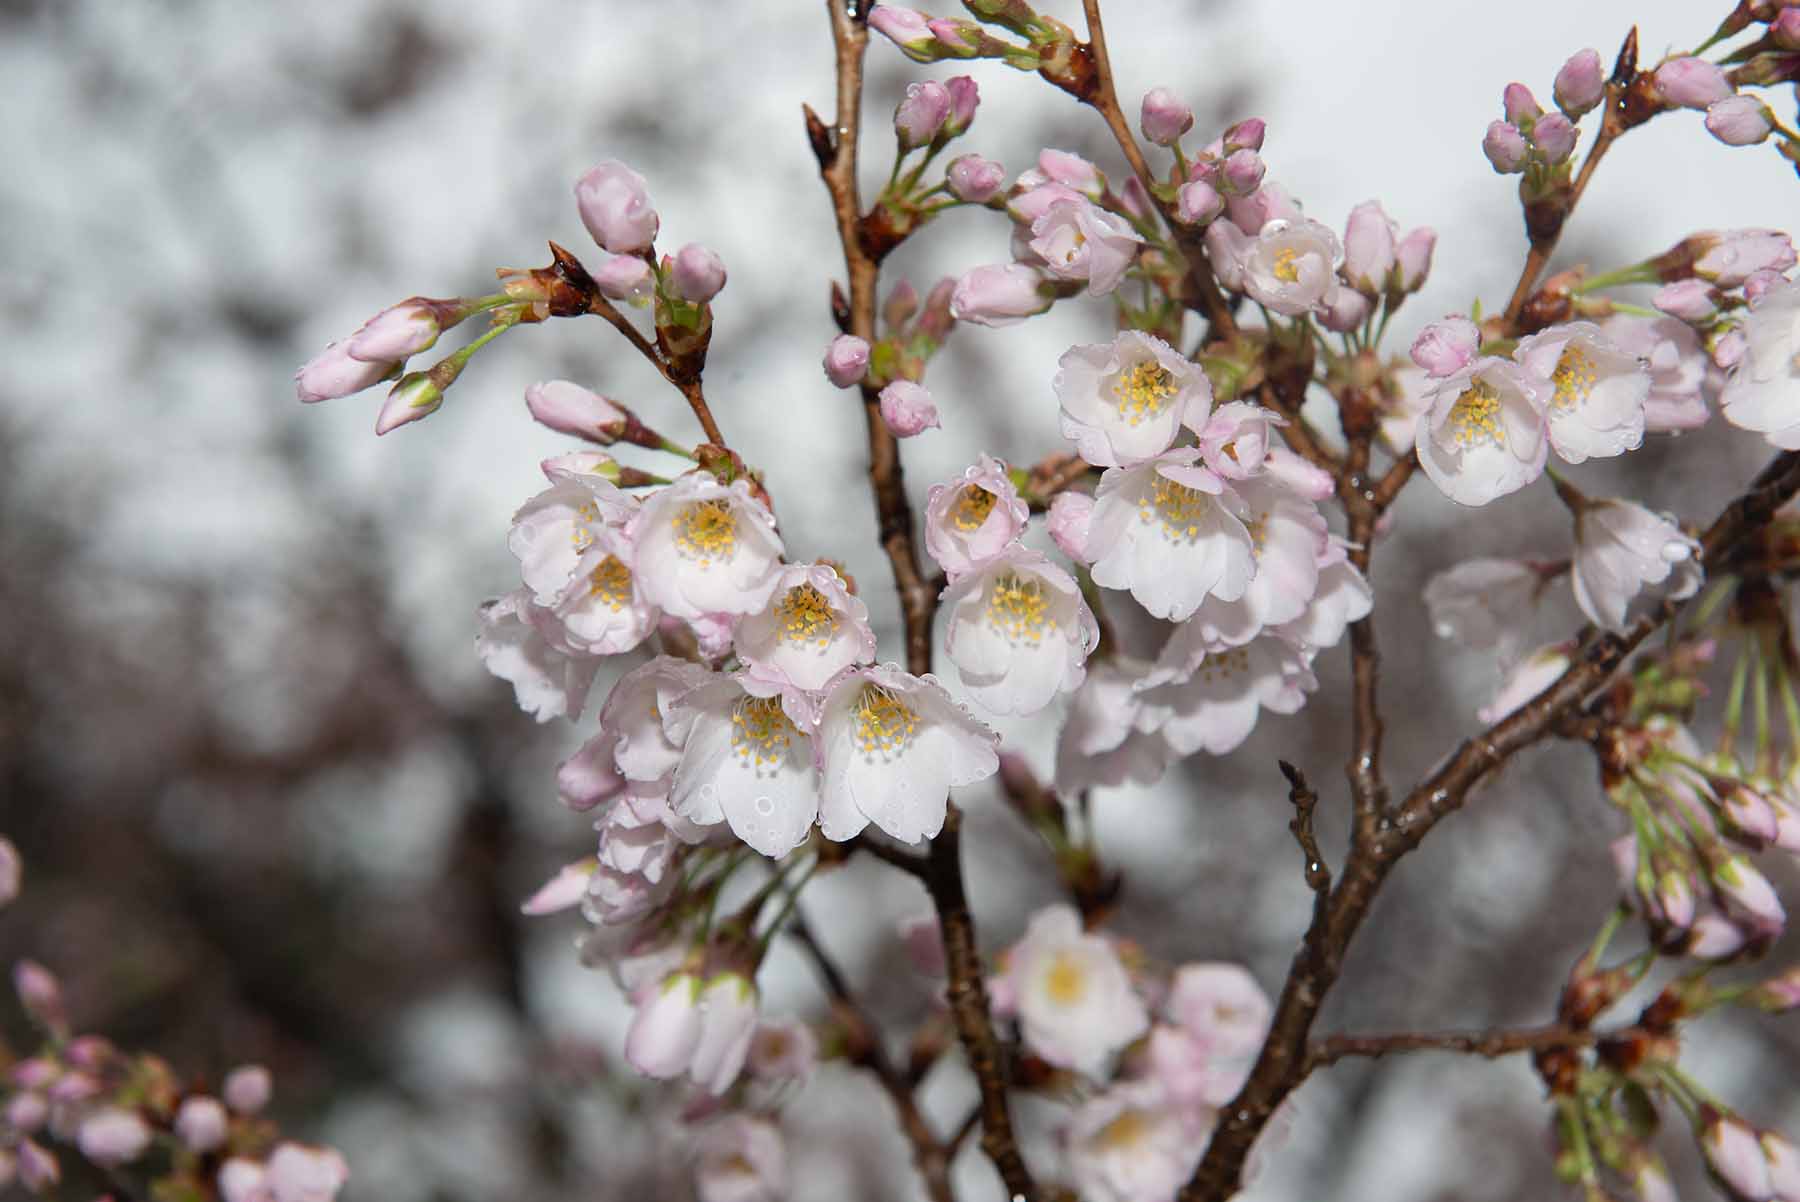 Close-up photo of a flowering cherry blossom tree limb